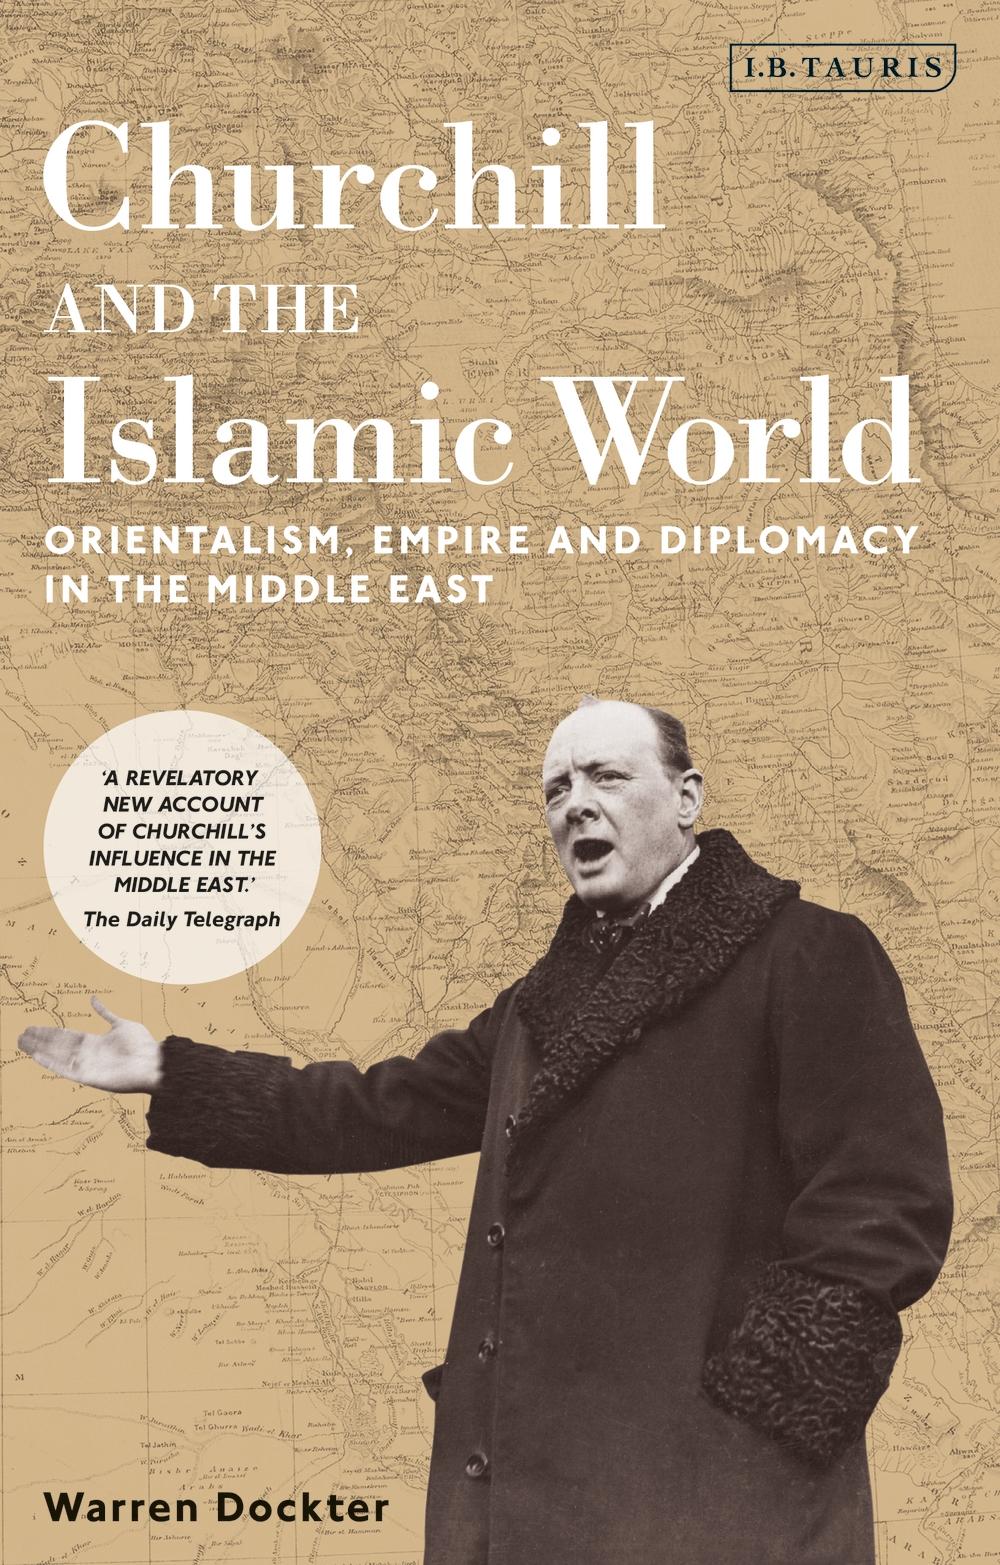 Churchill and the Islamic World - Warren Dockter